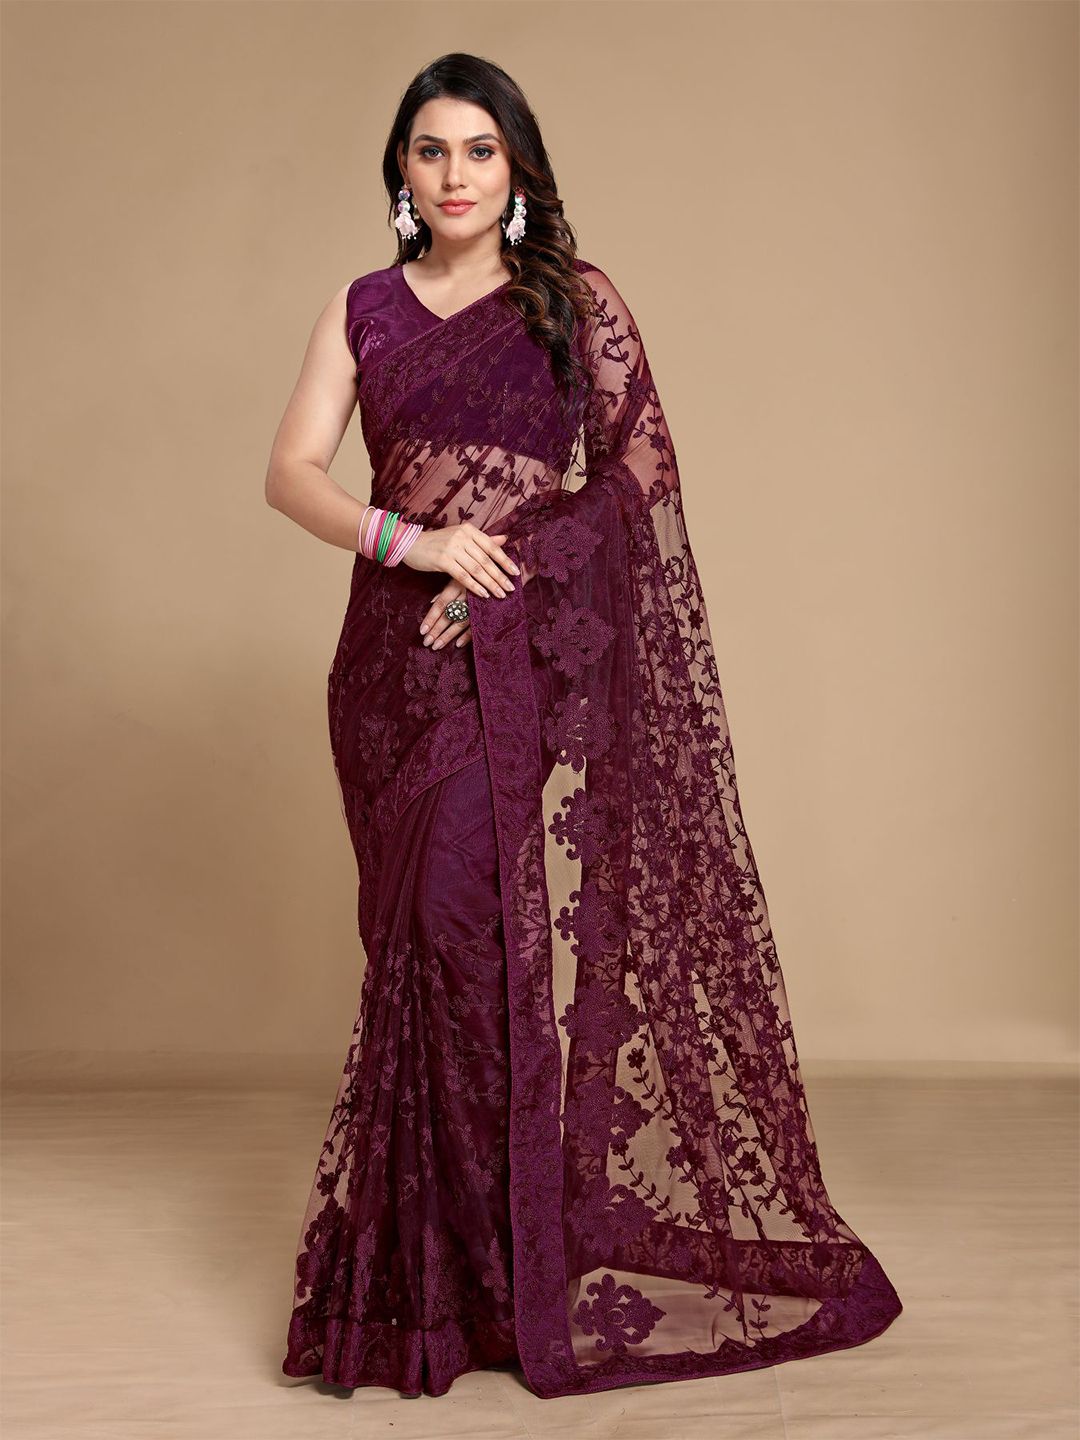 VAIRAGEE Purple Floral Net Saree Price in India